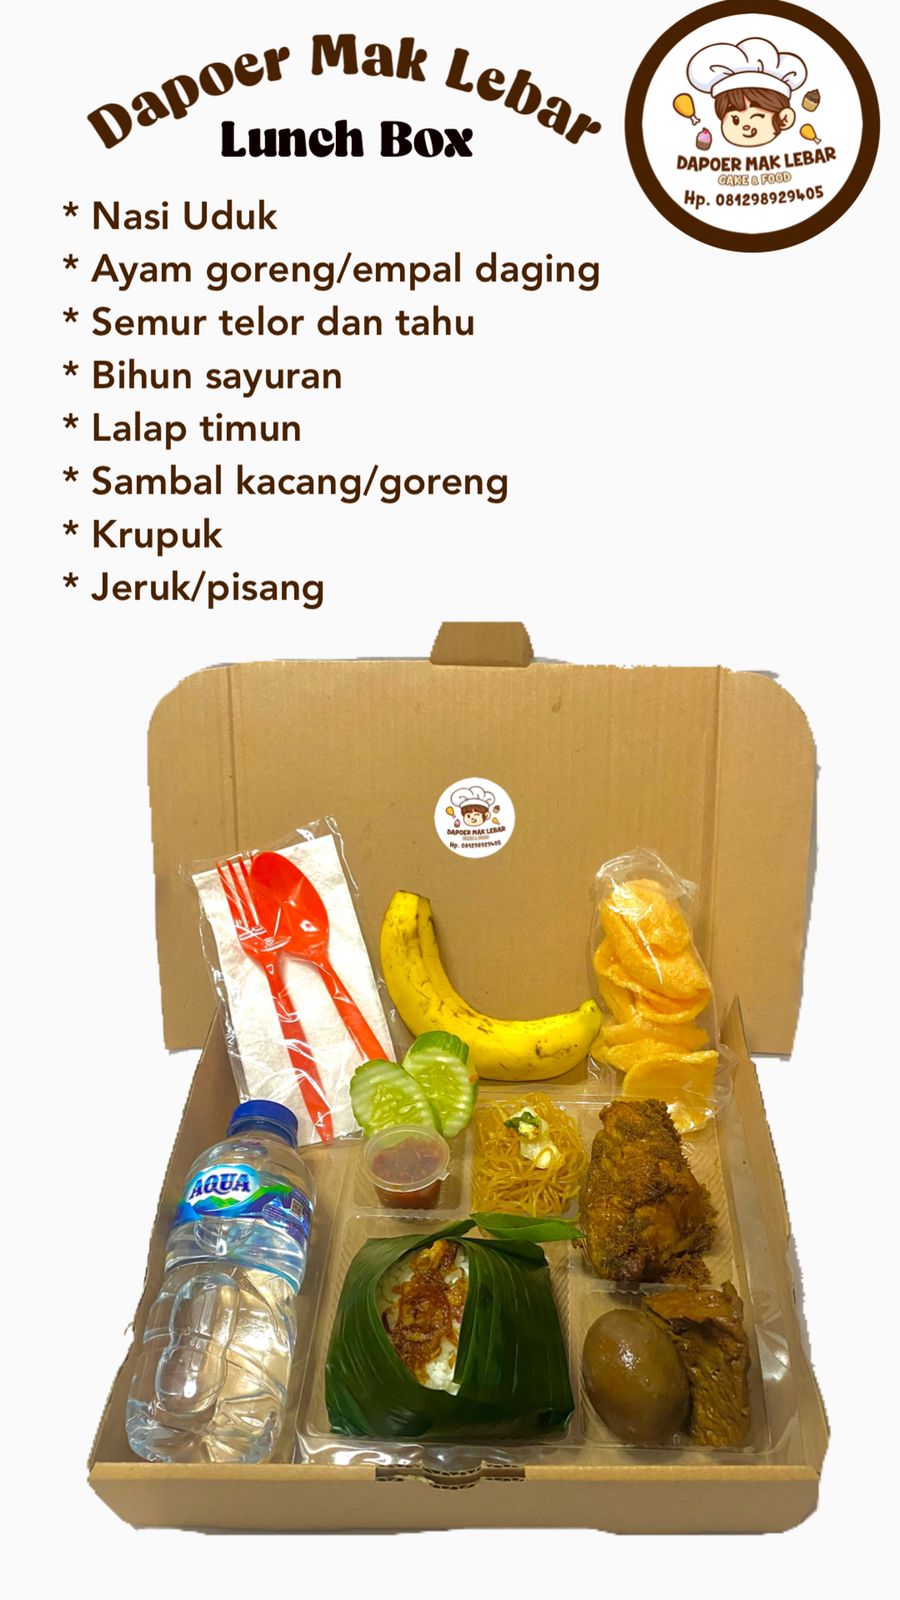 Nasi Box / Lunch Box 4 - Dapoer Mak Lebar